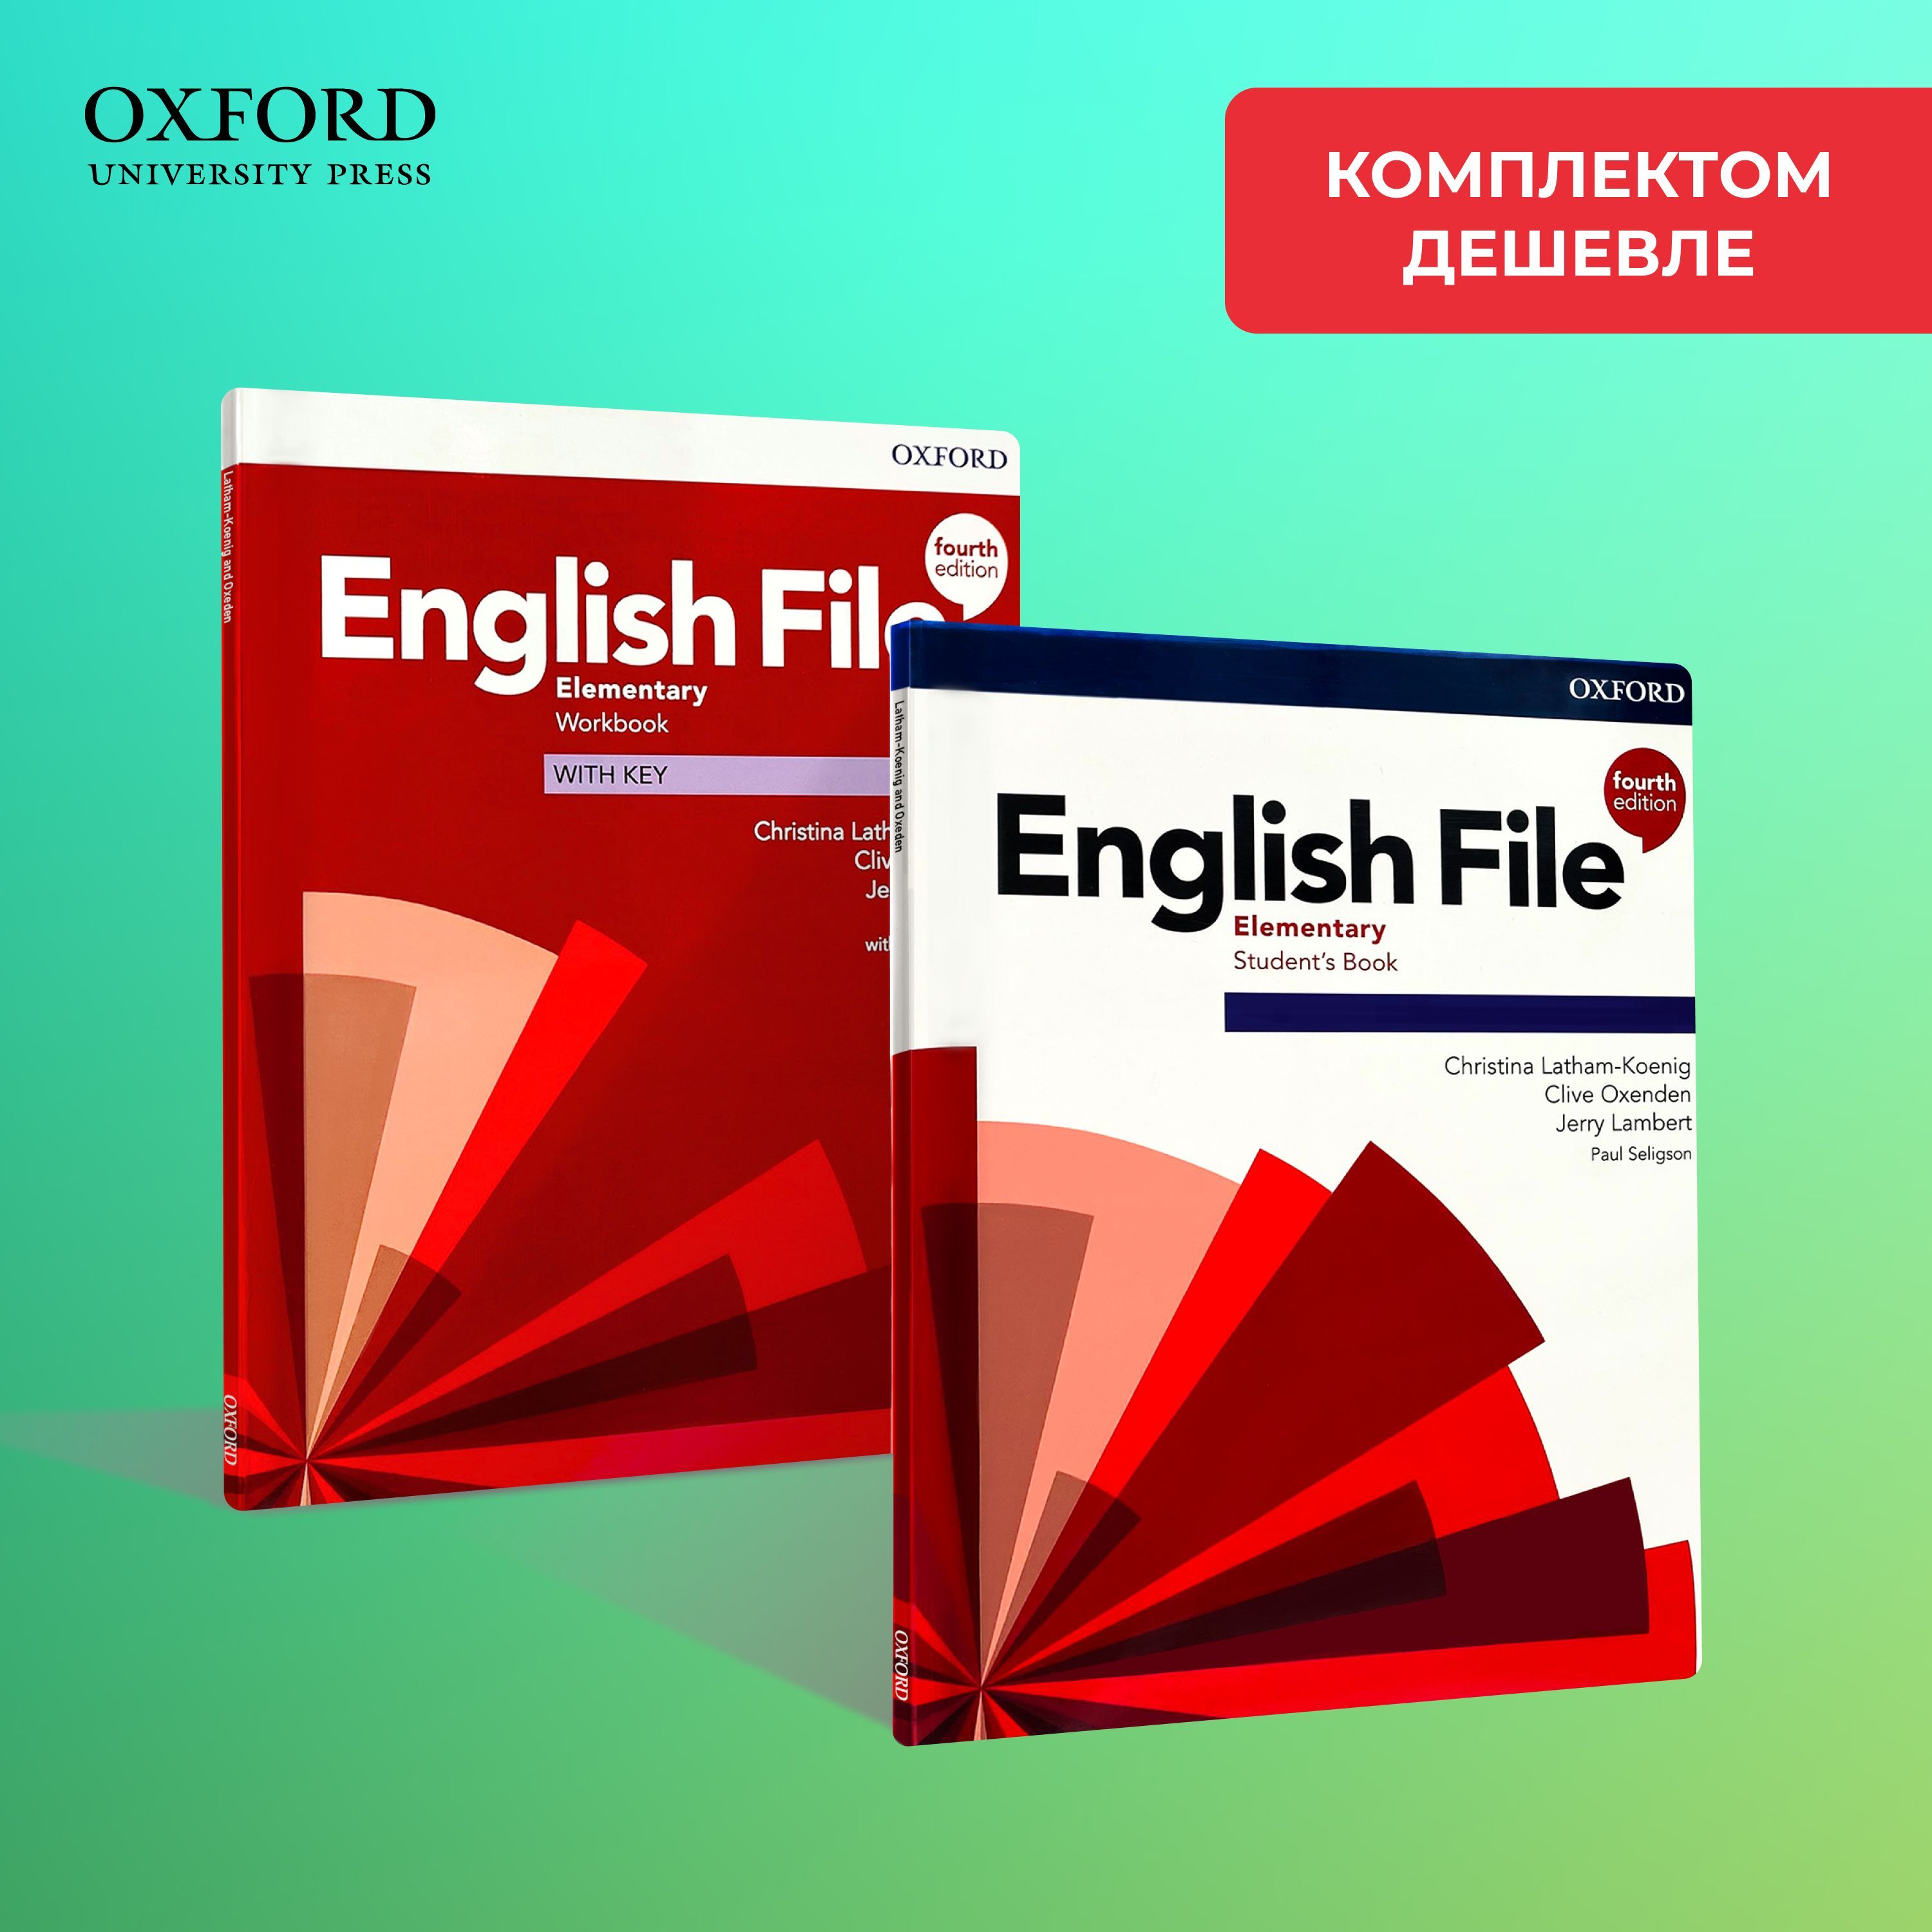 English file 4 Edition Elementary. English file Elementary 4th Edition. English file Elementary 4th Edition 7b. English file fourth Edition back Cover.